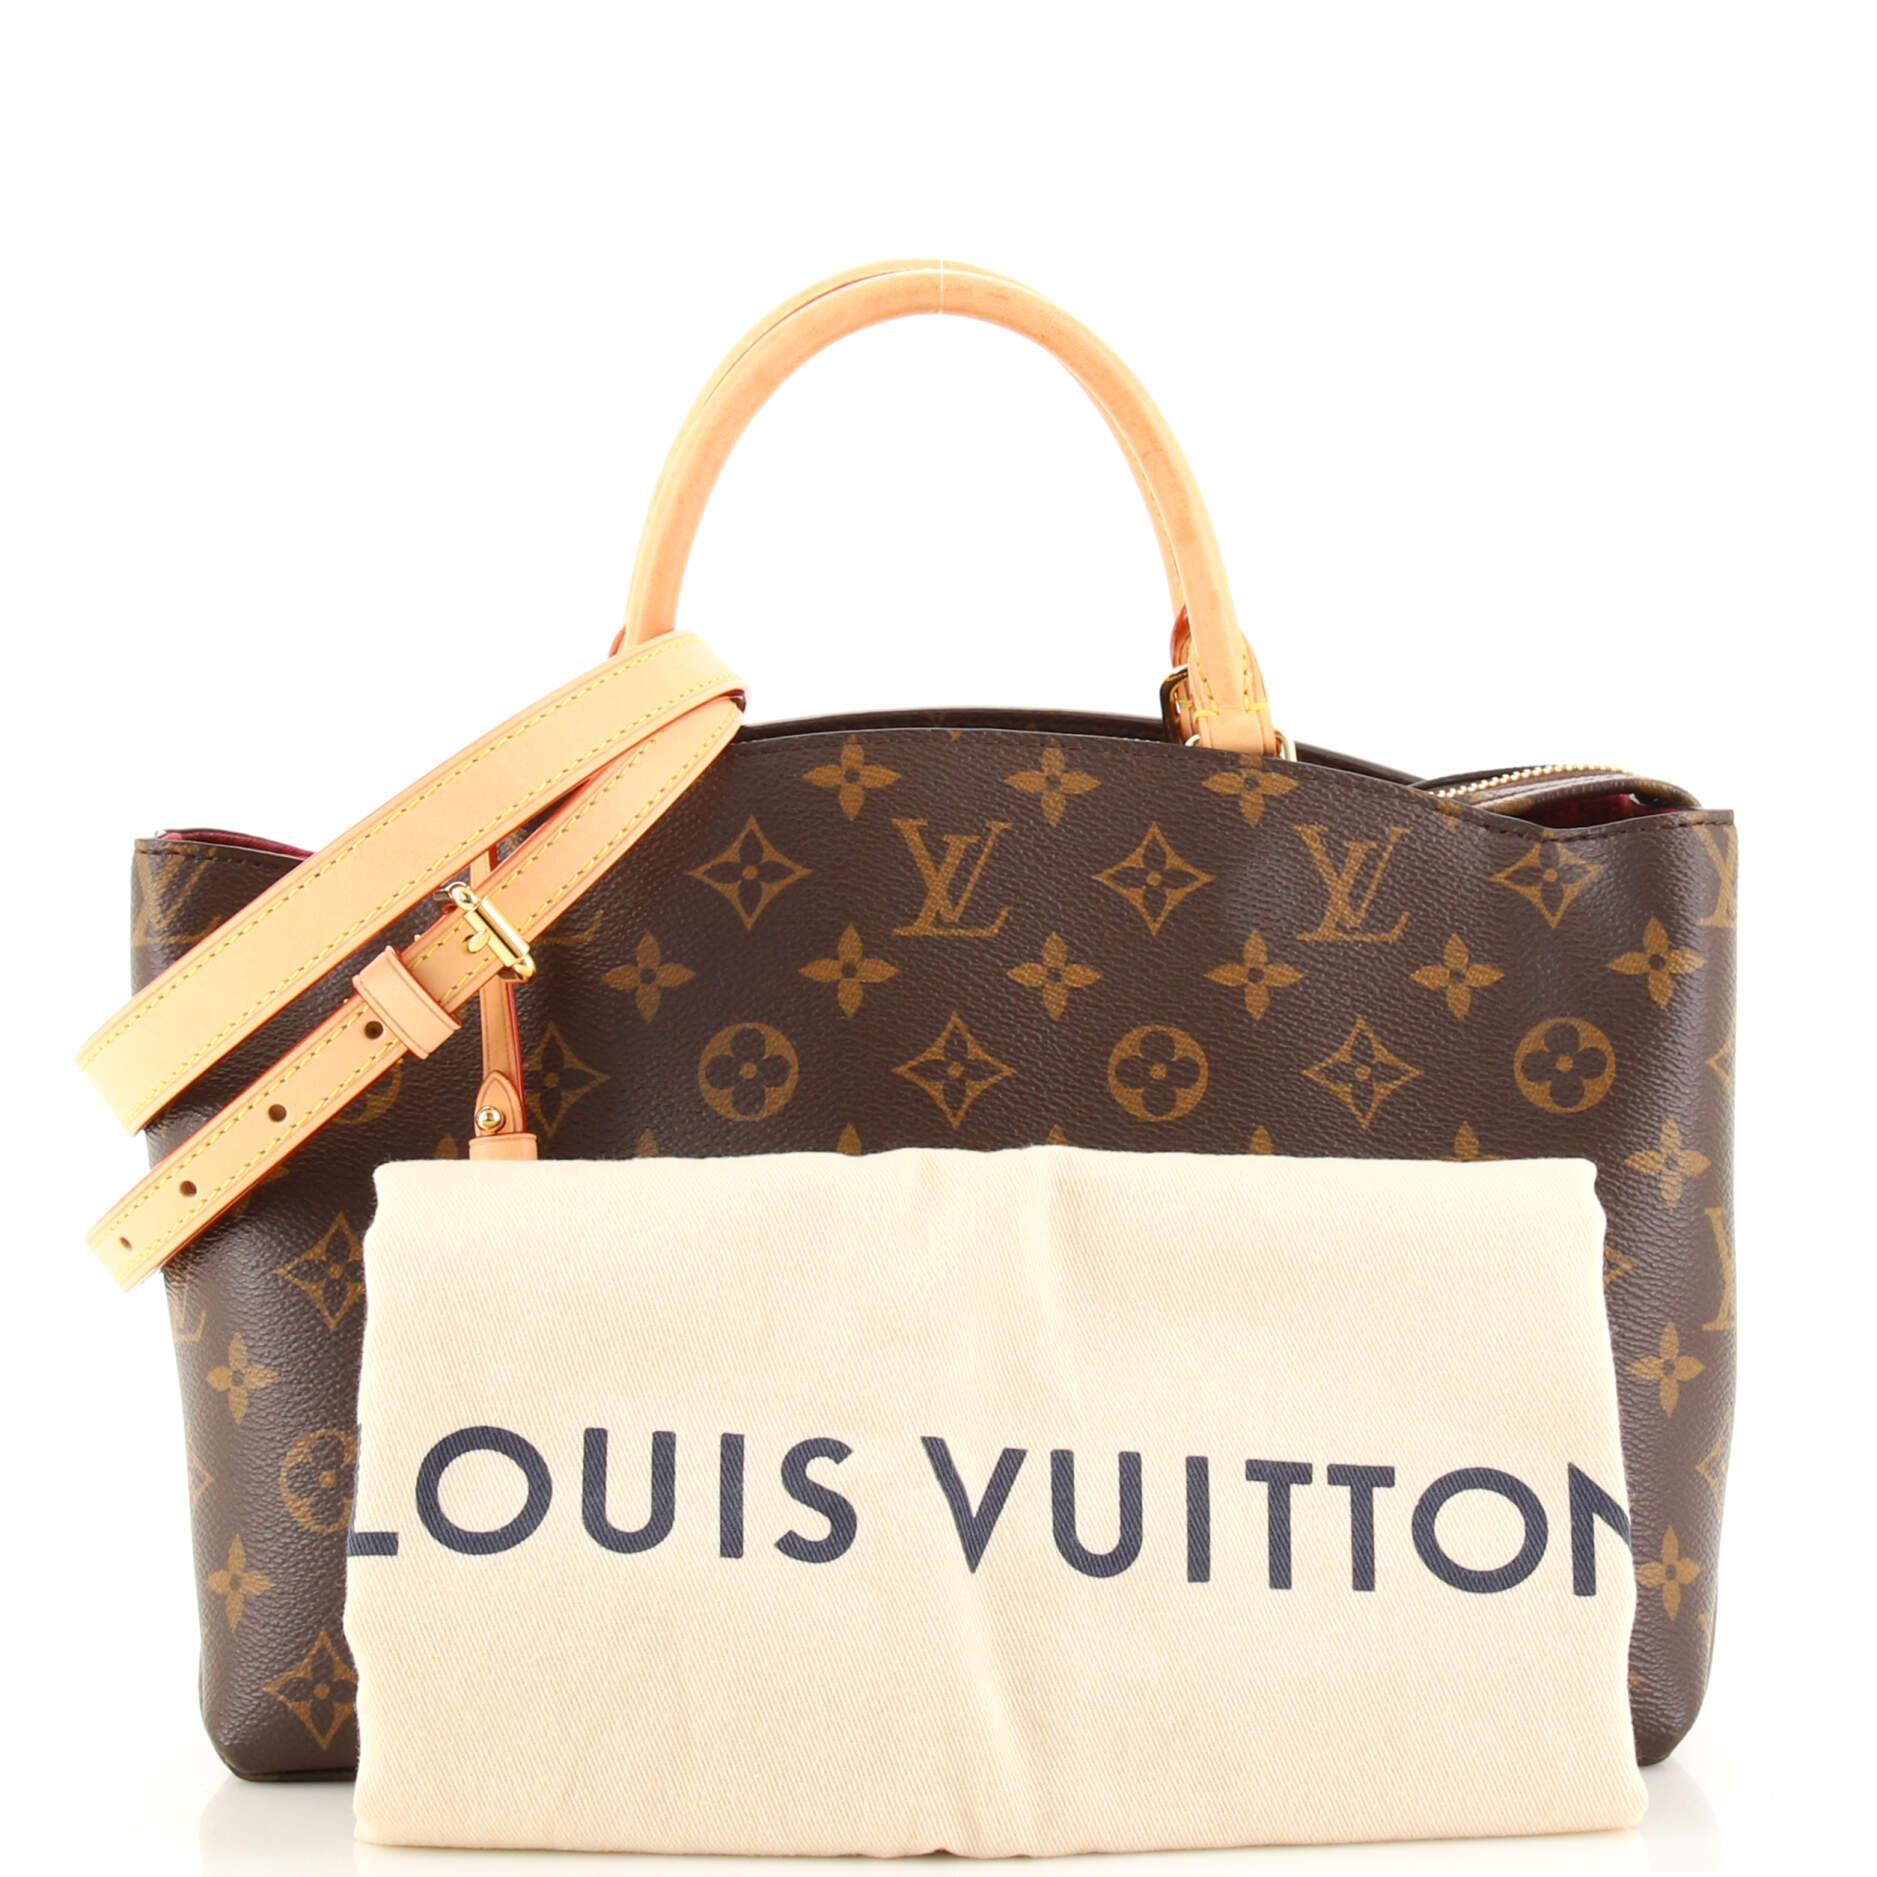 Sold at Auction: A handbag marked Louis Vuitton (Petit Palais